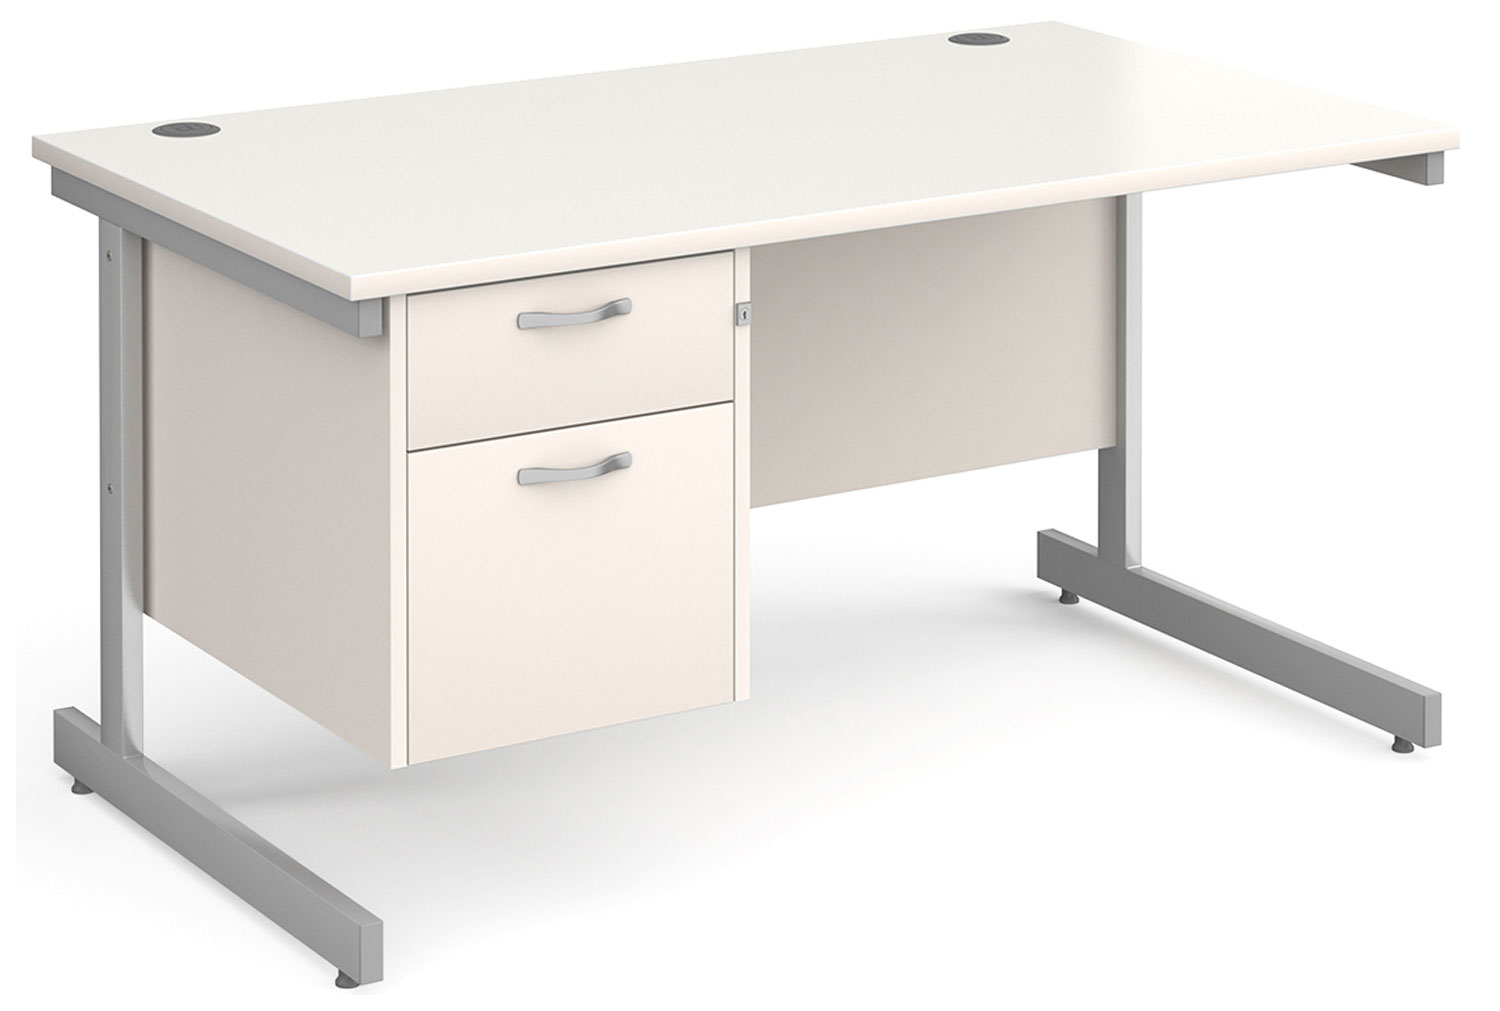 Thrifty Next-Day Rectangular Desk 2 Drawers White